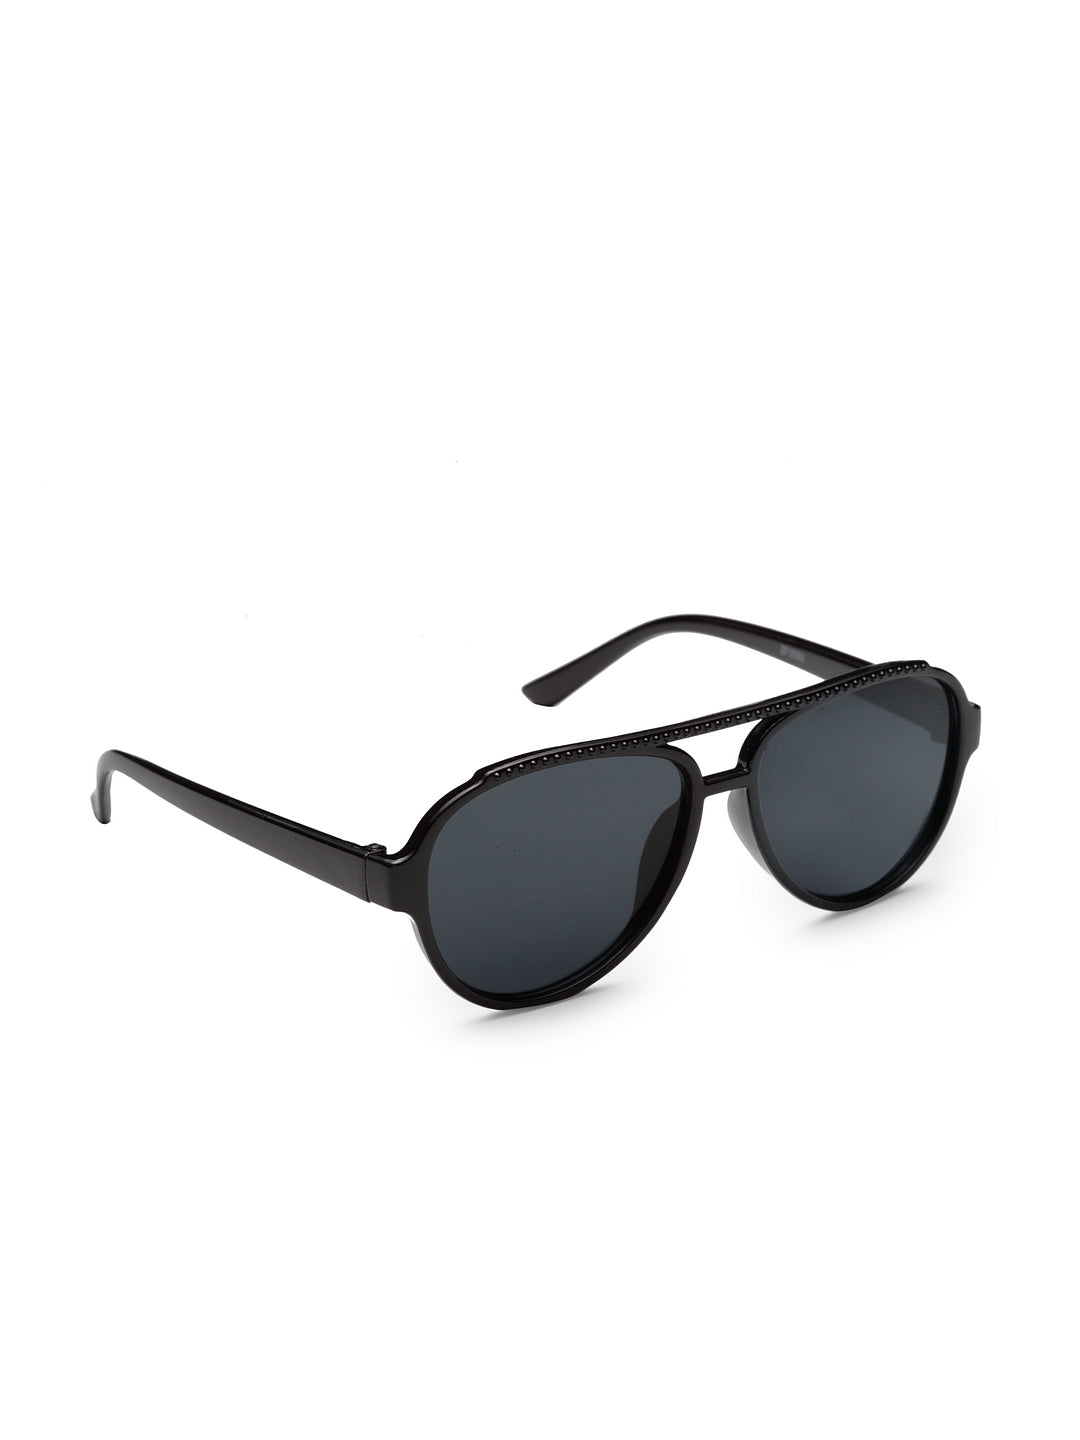 Stol'n Premium Attractive Fashionable UV-Protected Aviator shape Sunglasses - Black